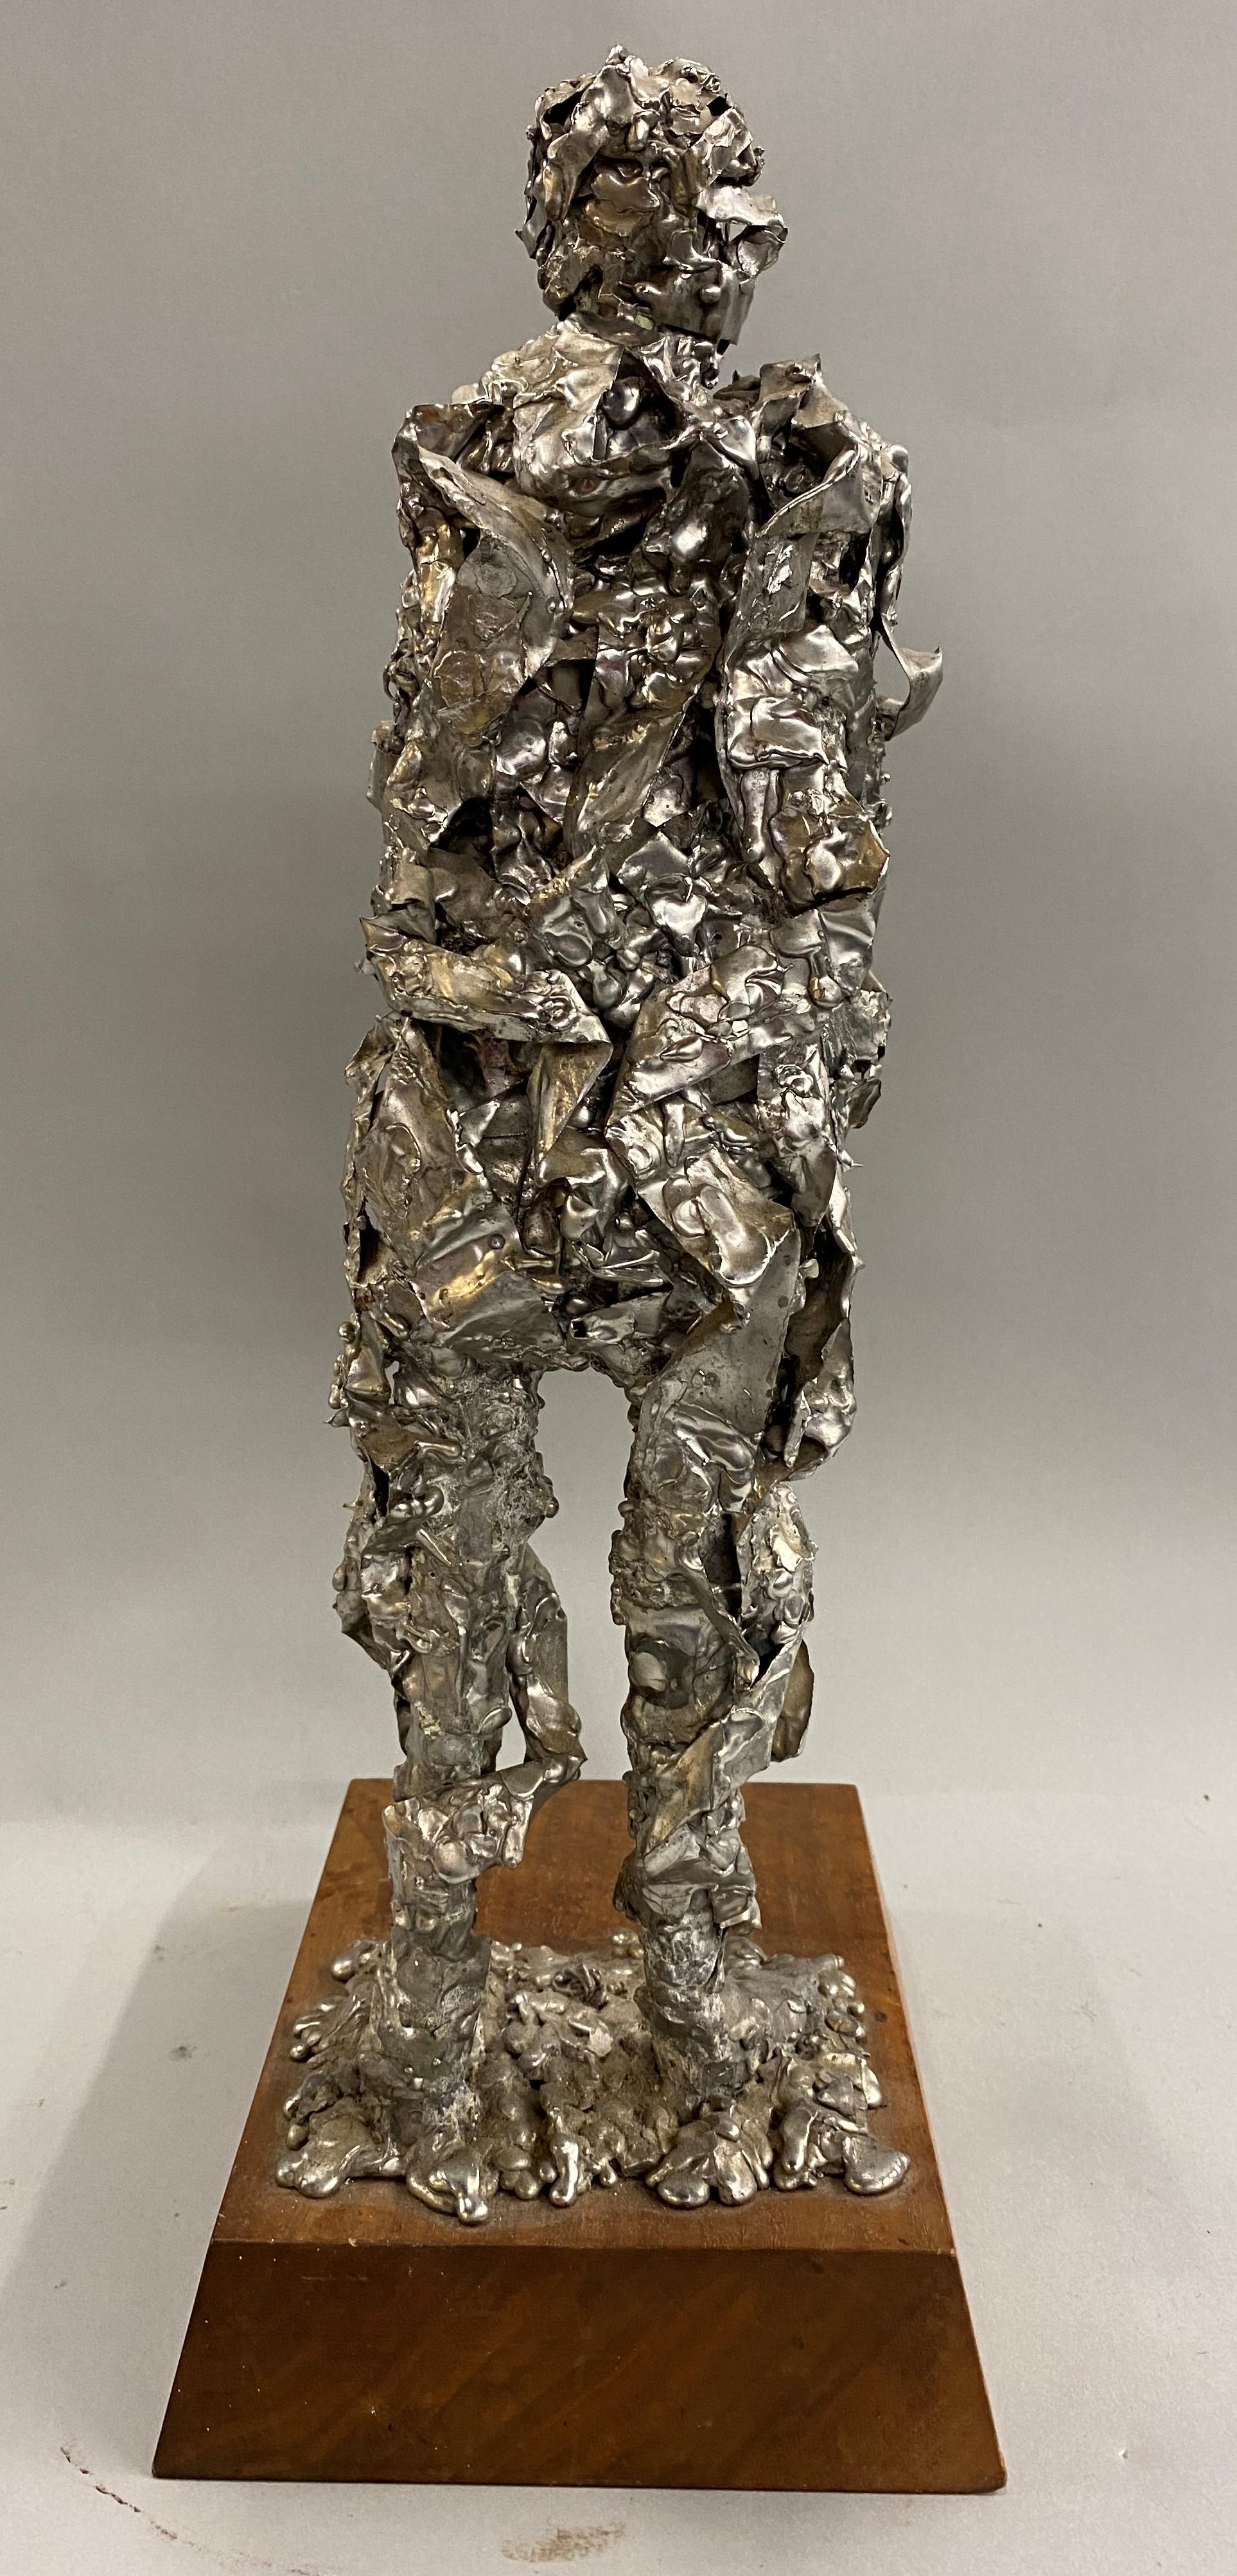 Brutalist Figural Sculpture of a Man - Modern Art by Unknown